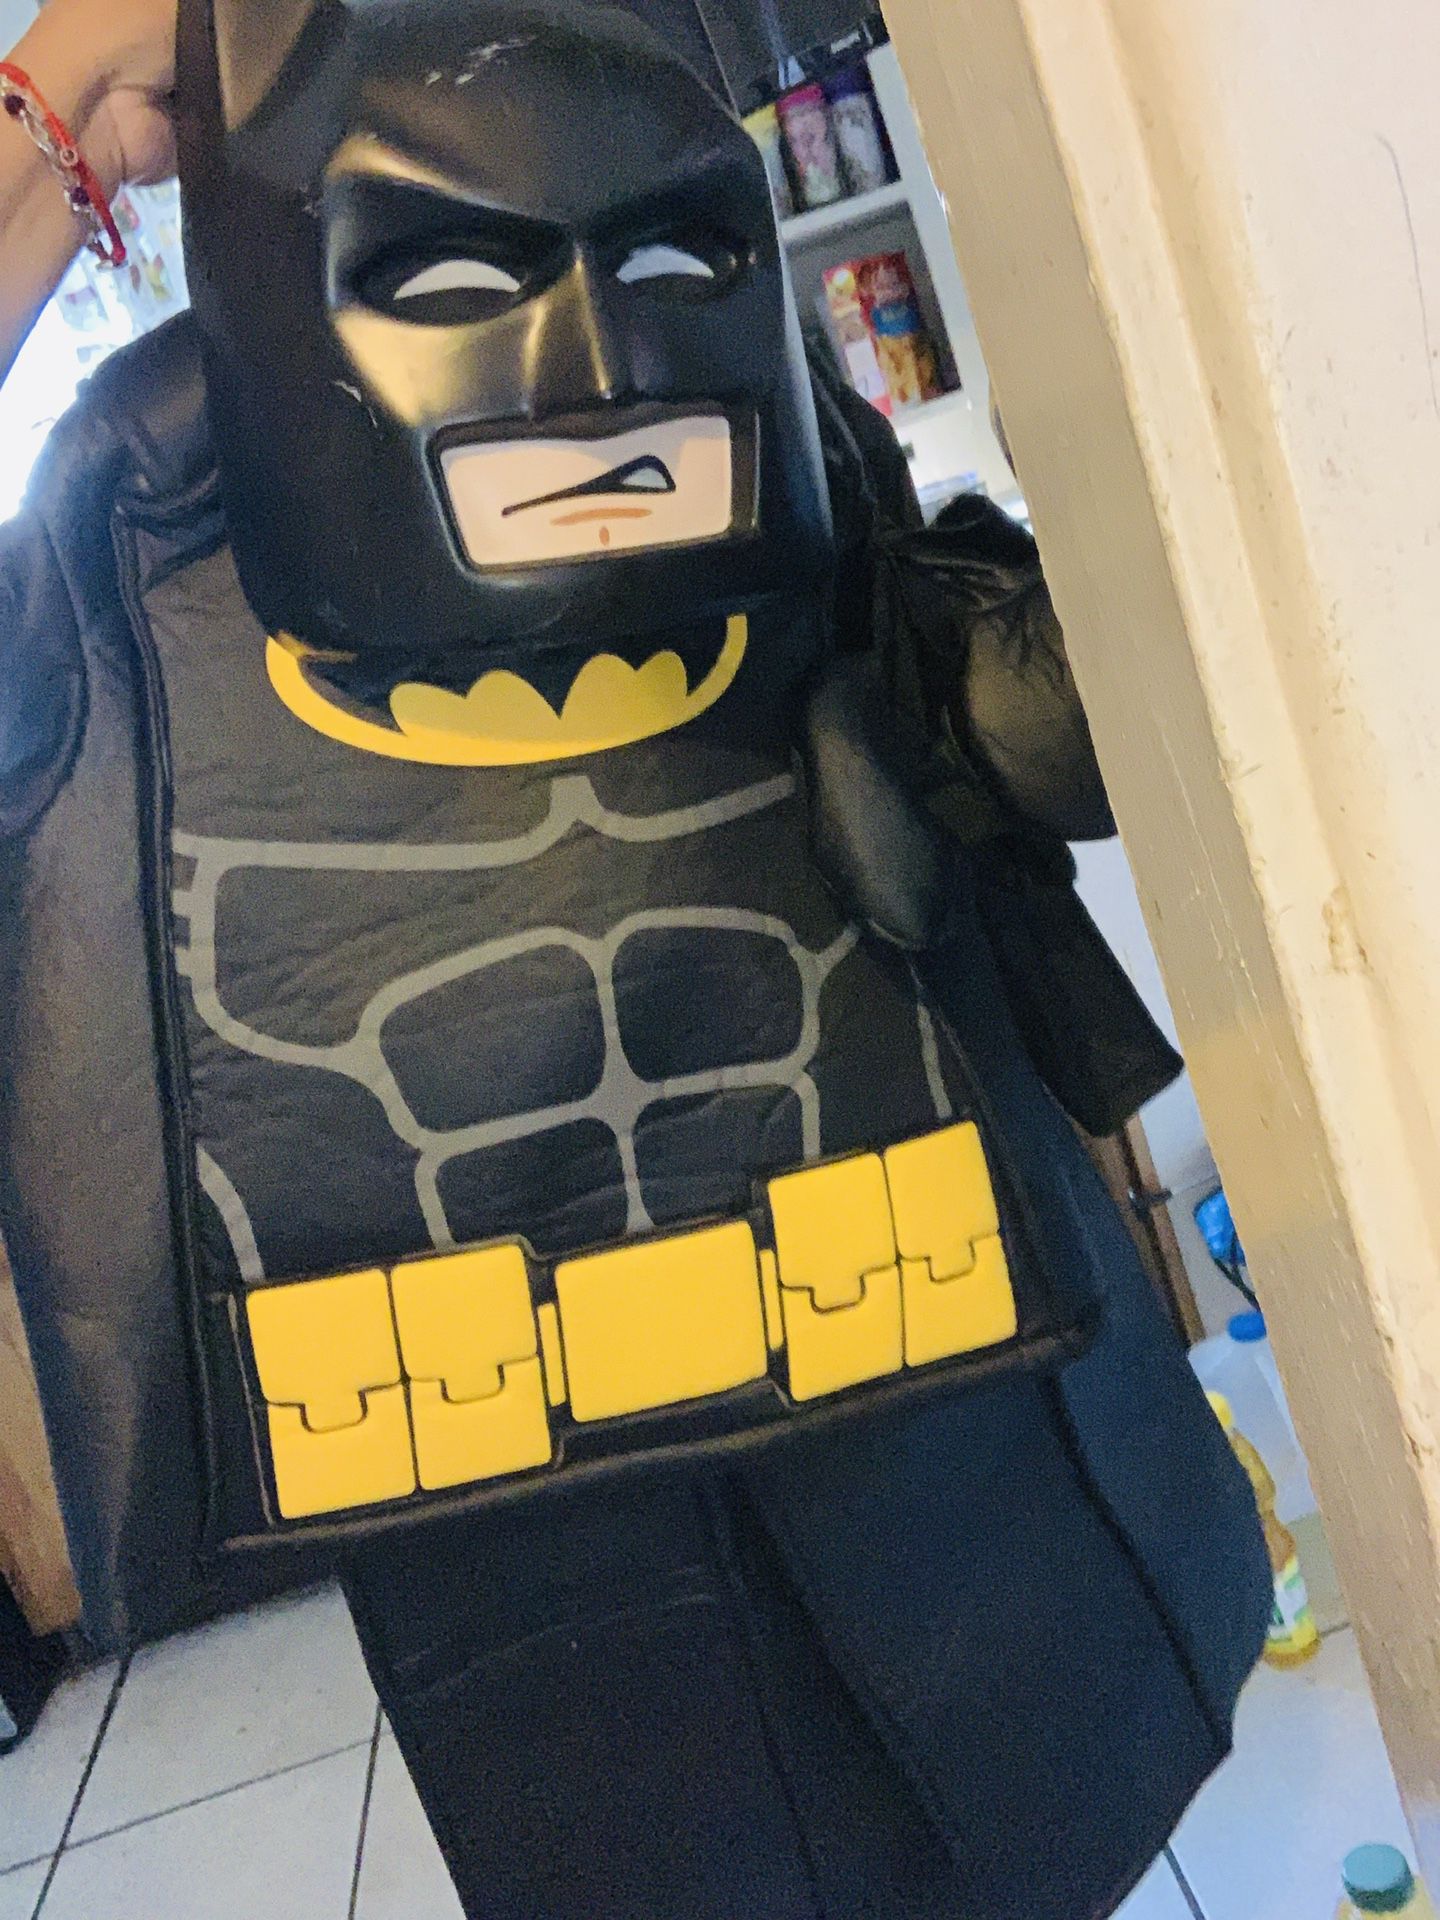 Lego Batman costume.